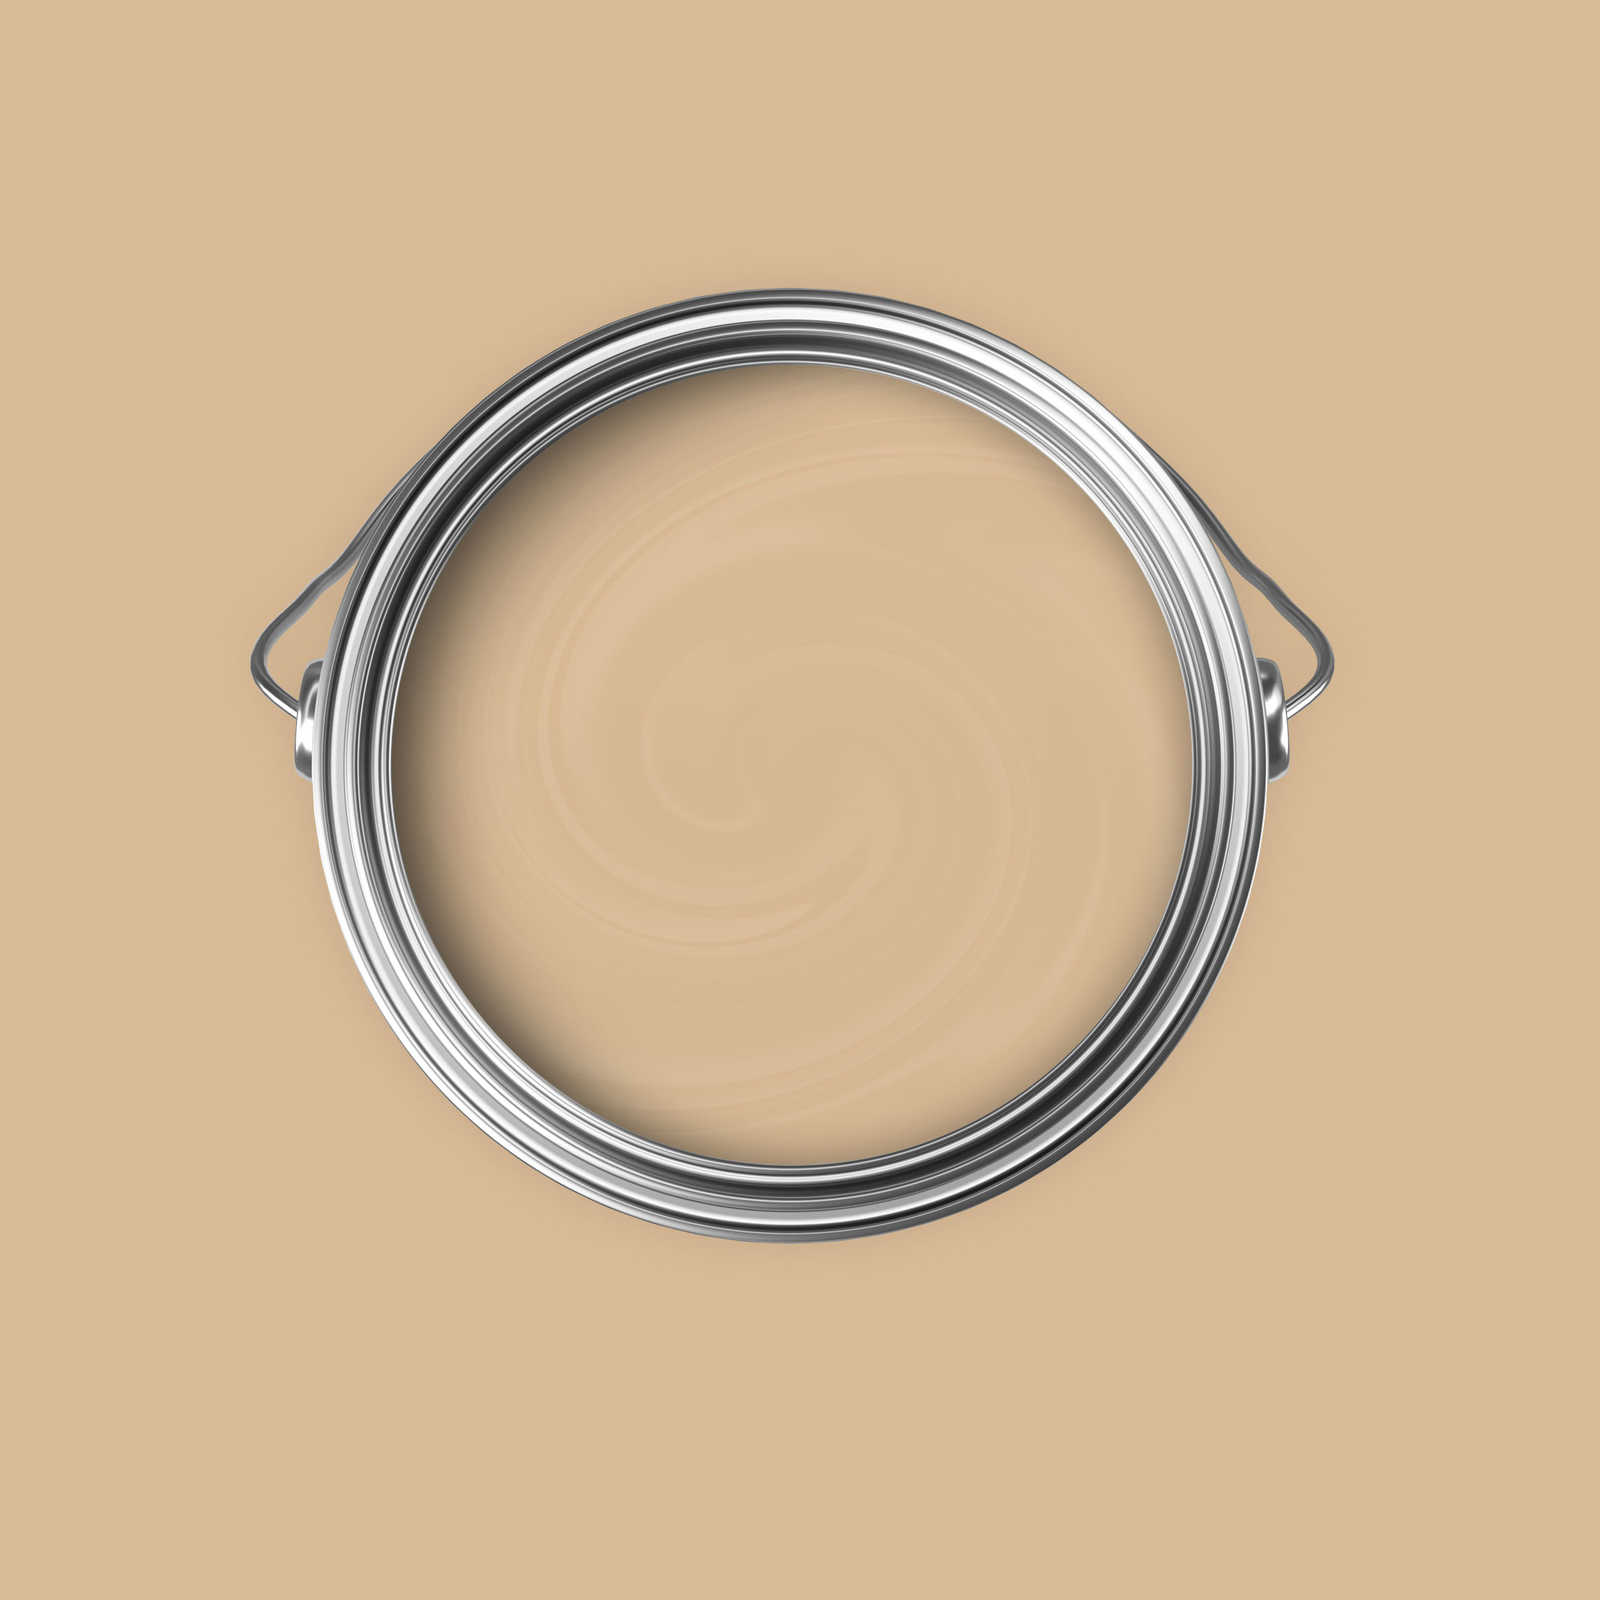             Premium Muurverf sereen cappuccino »Boho Beige« NW725 – 5 liter
        